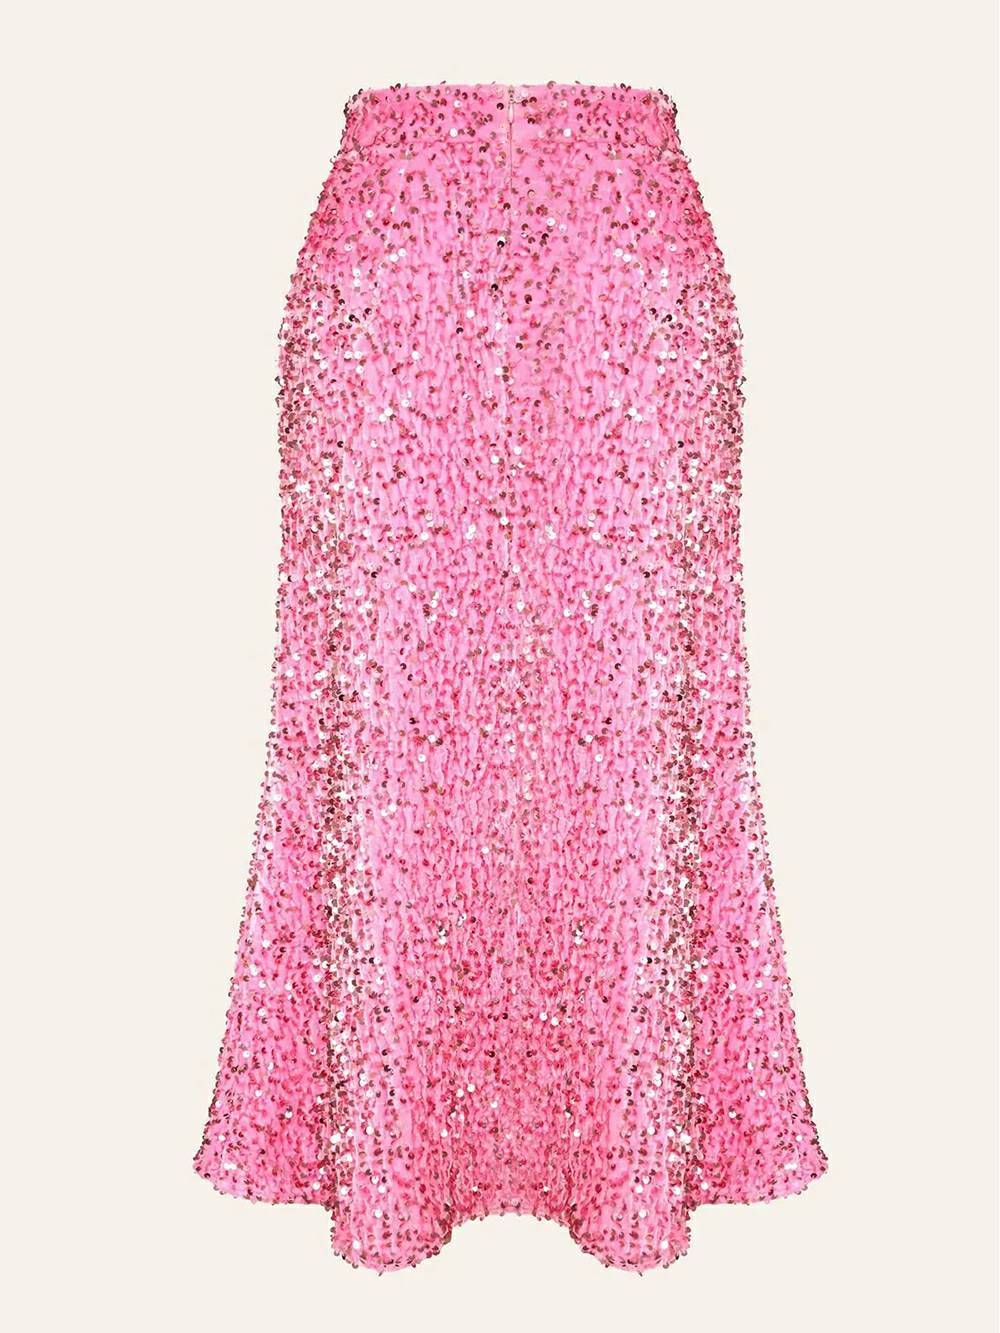 Met pailletten versierde fluwelen rok in roze